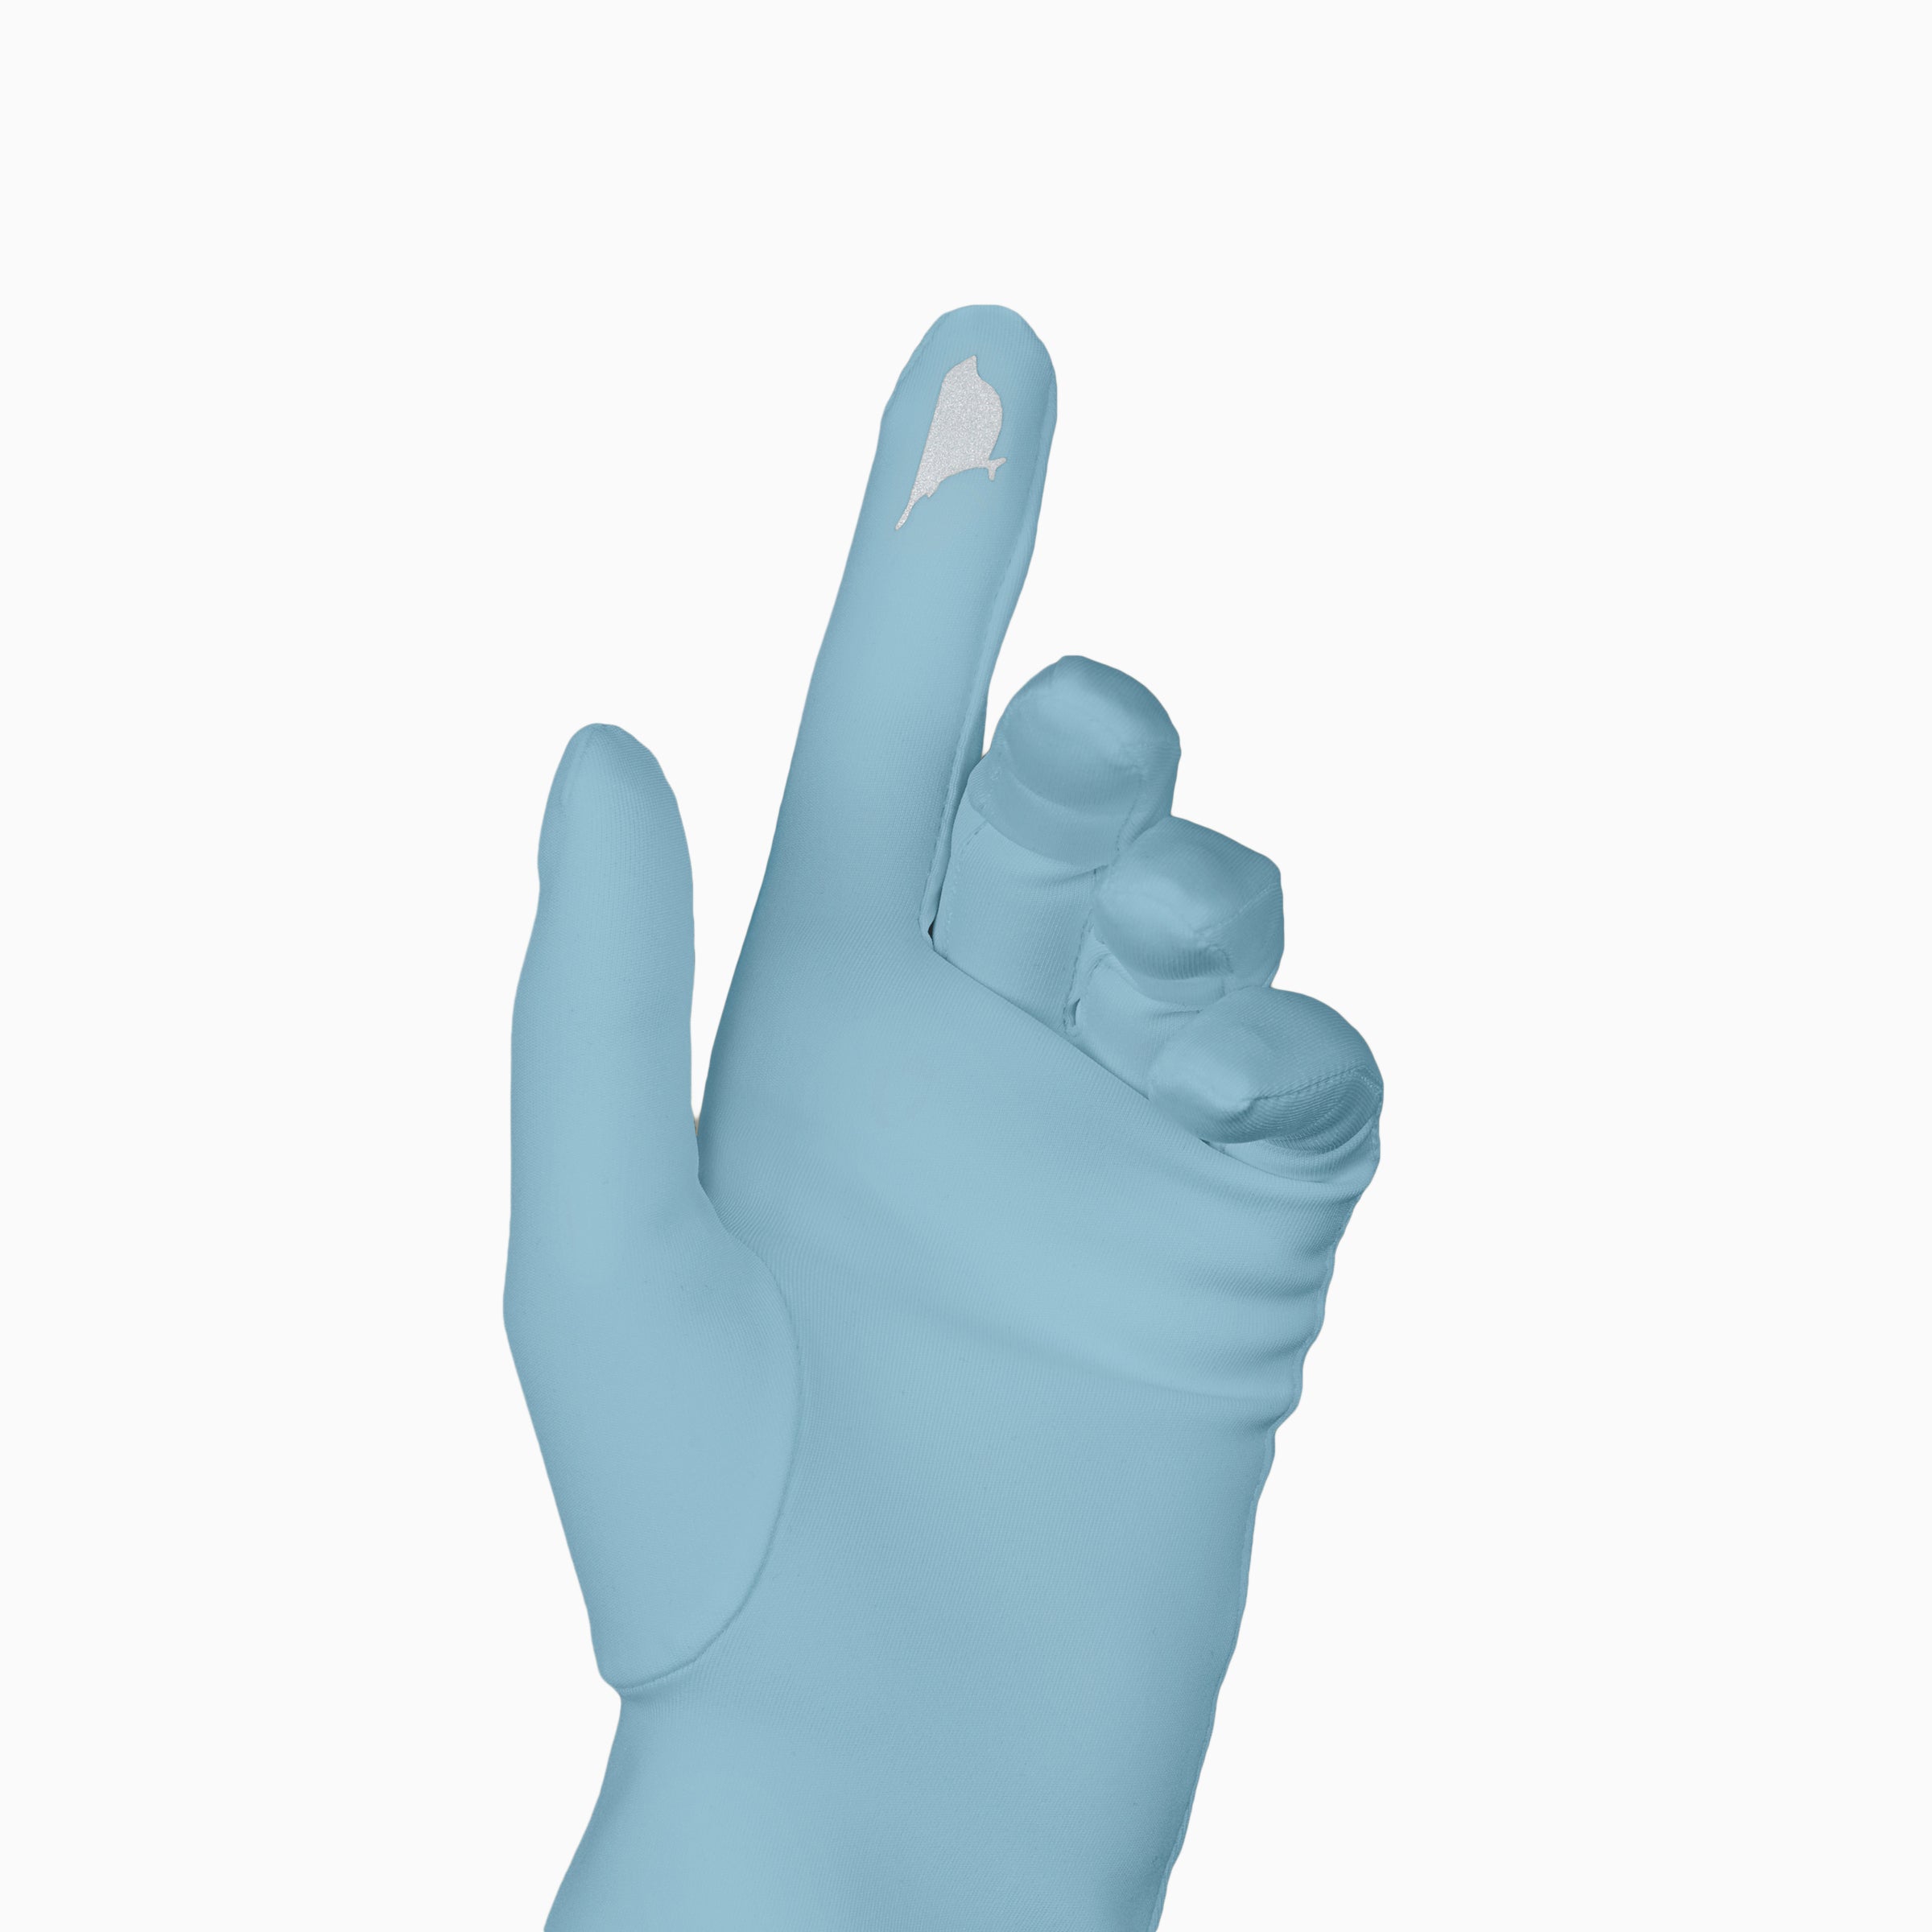 Light Blue women's glove against white background showing technology friendly index finger.